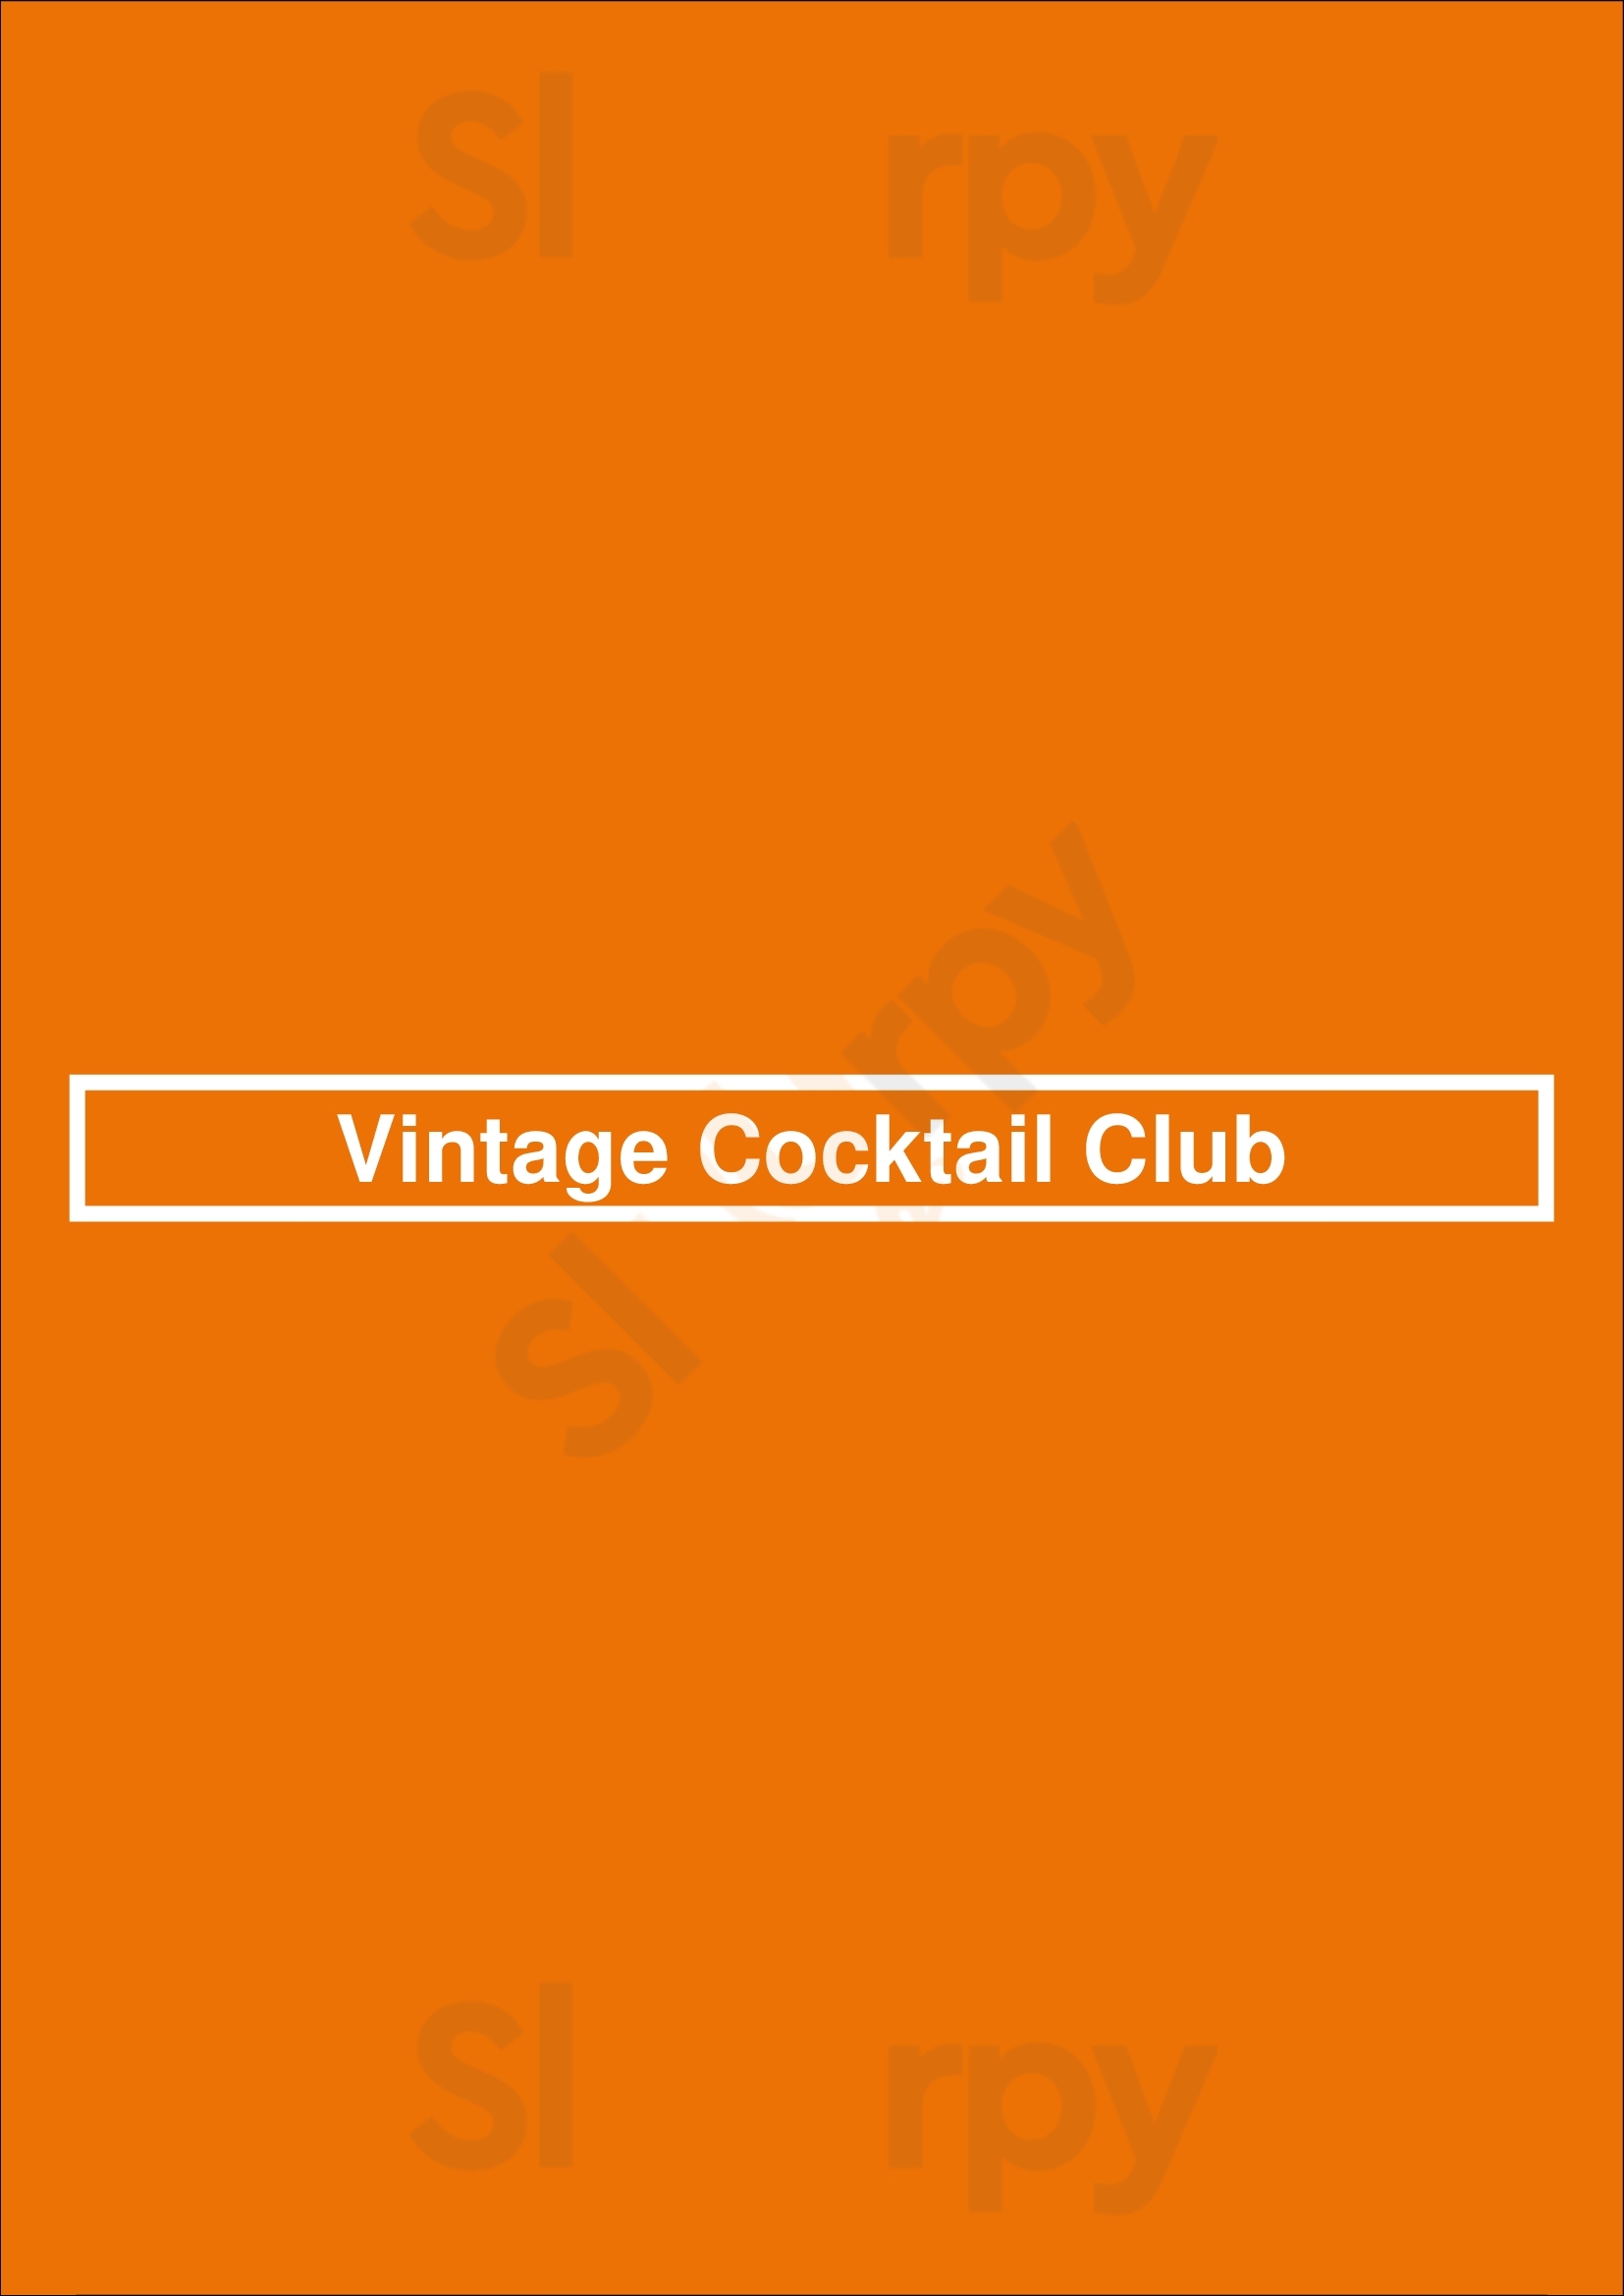 Vintage Cocktail Club Dublin Menu - 1